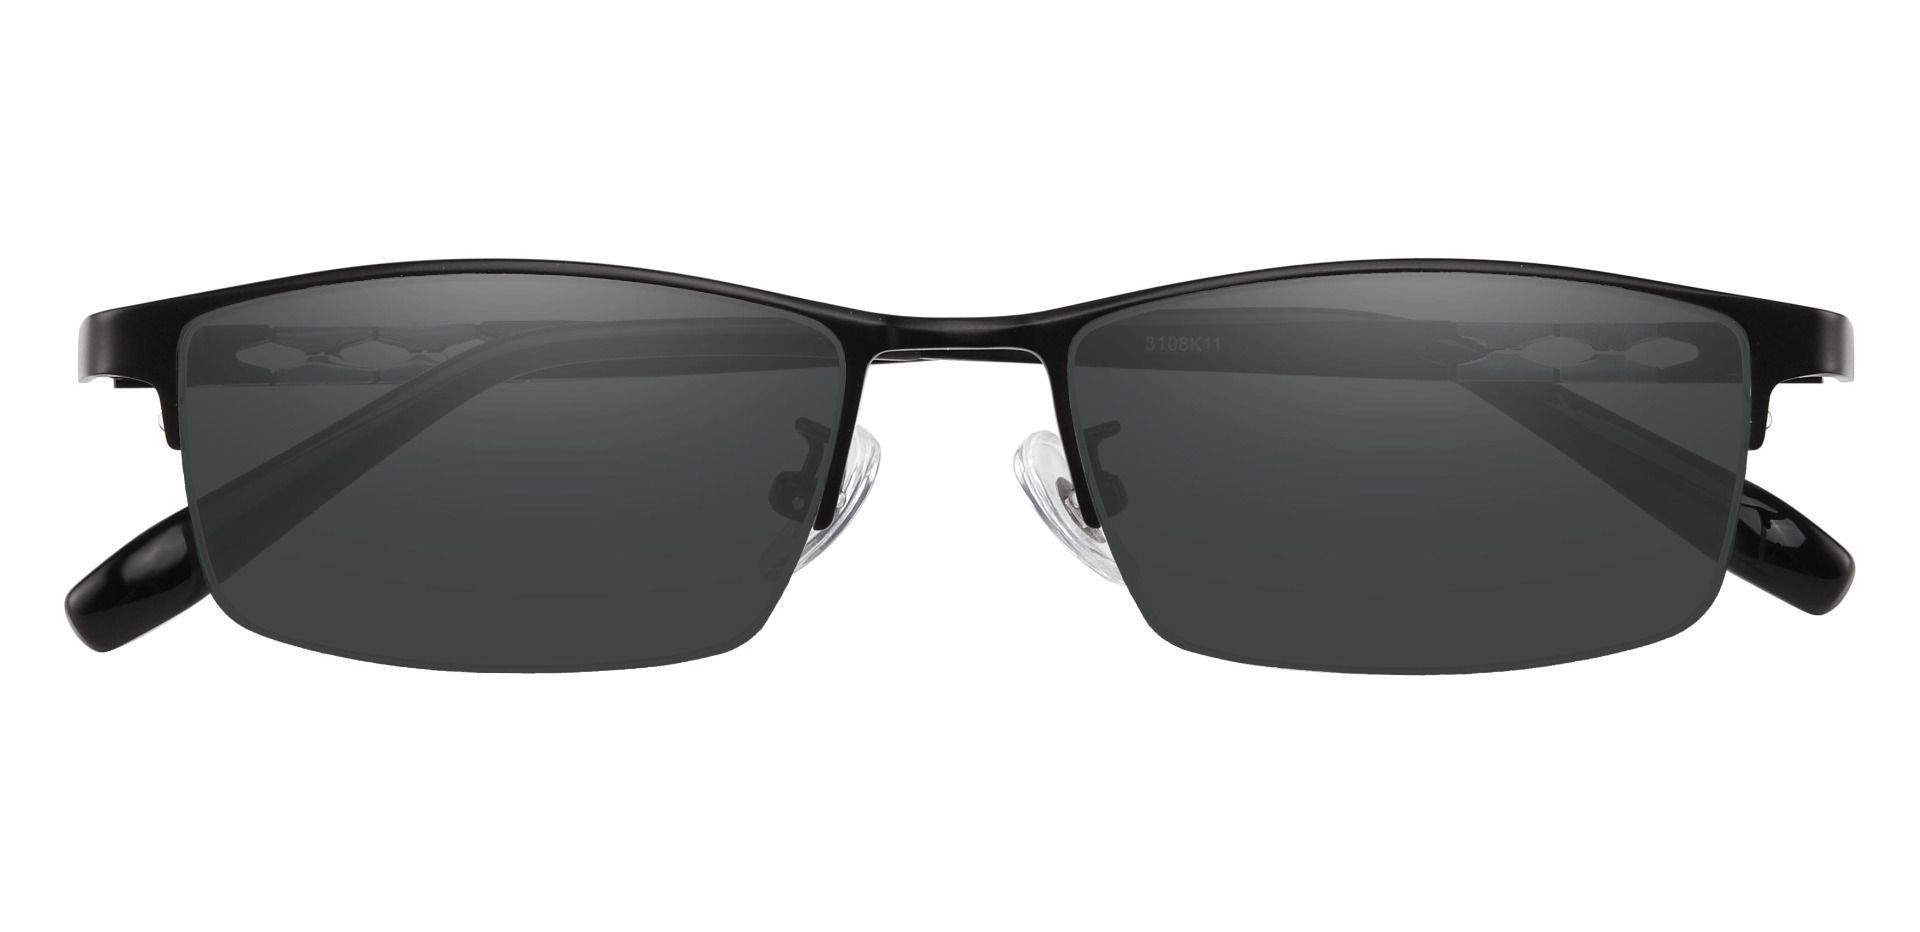 Burlington Rectangle Non-Rx Sunglasses - Black Frame With Gray Lenses